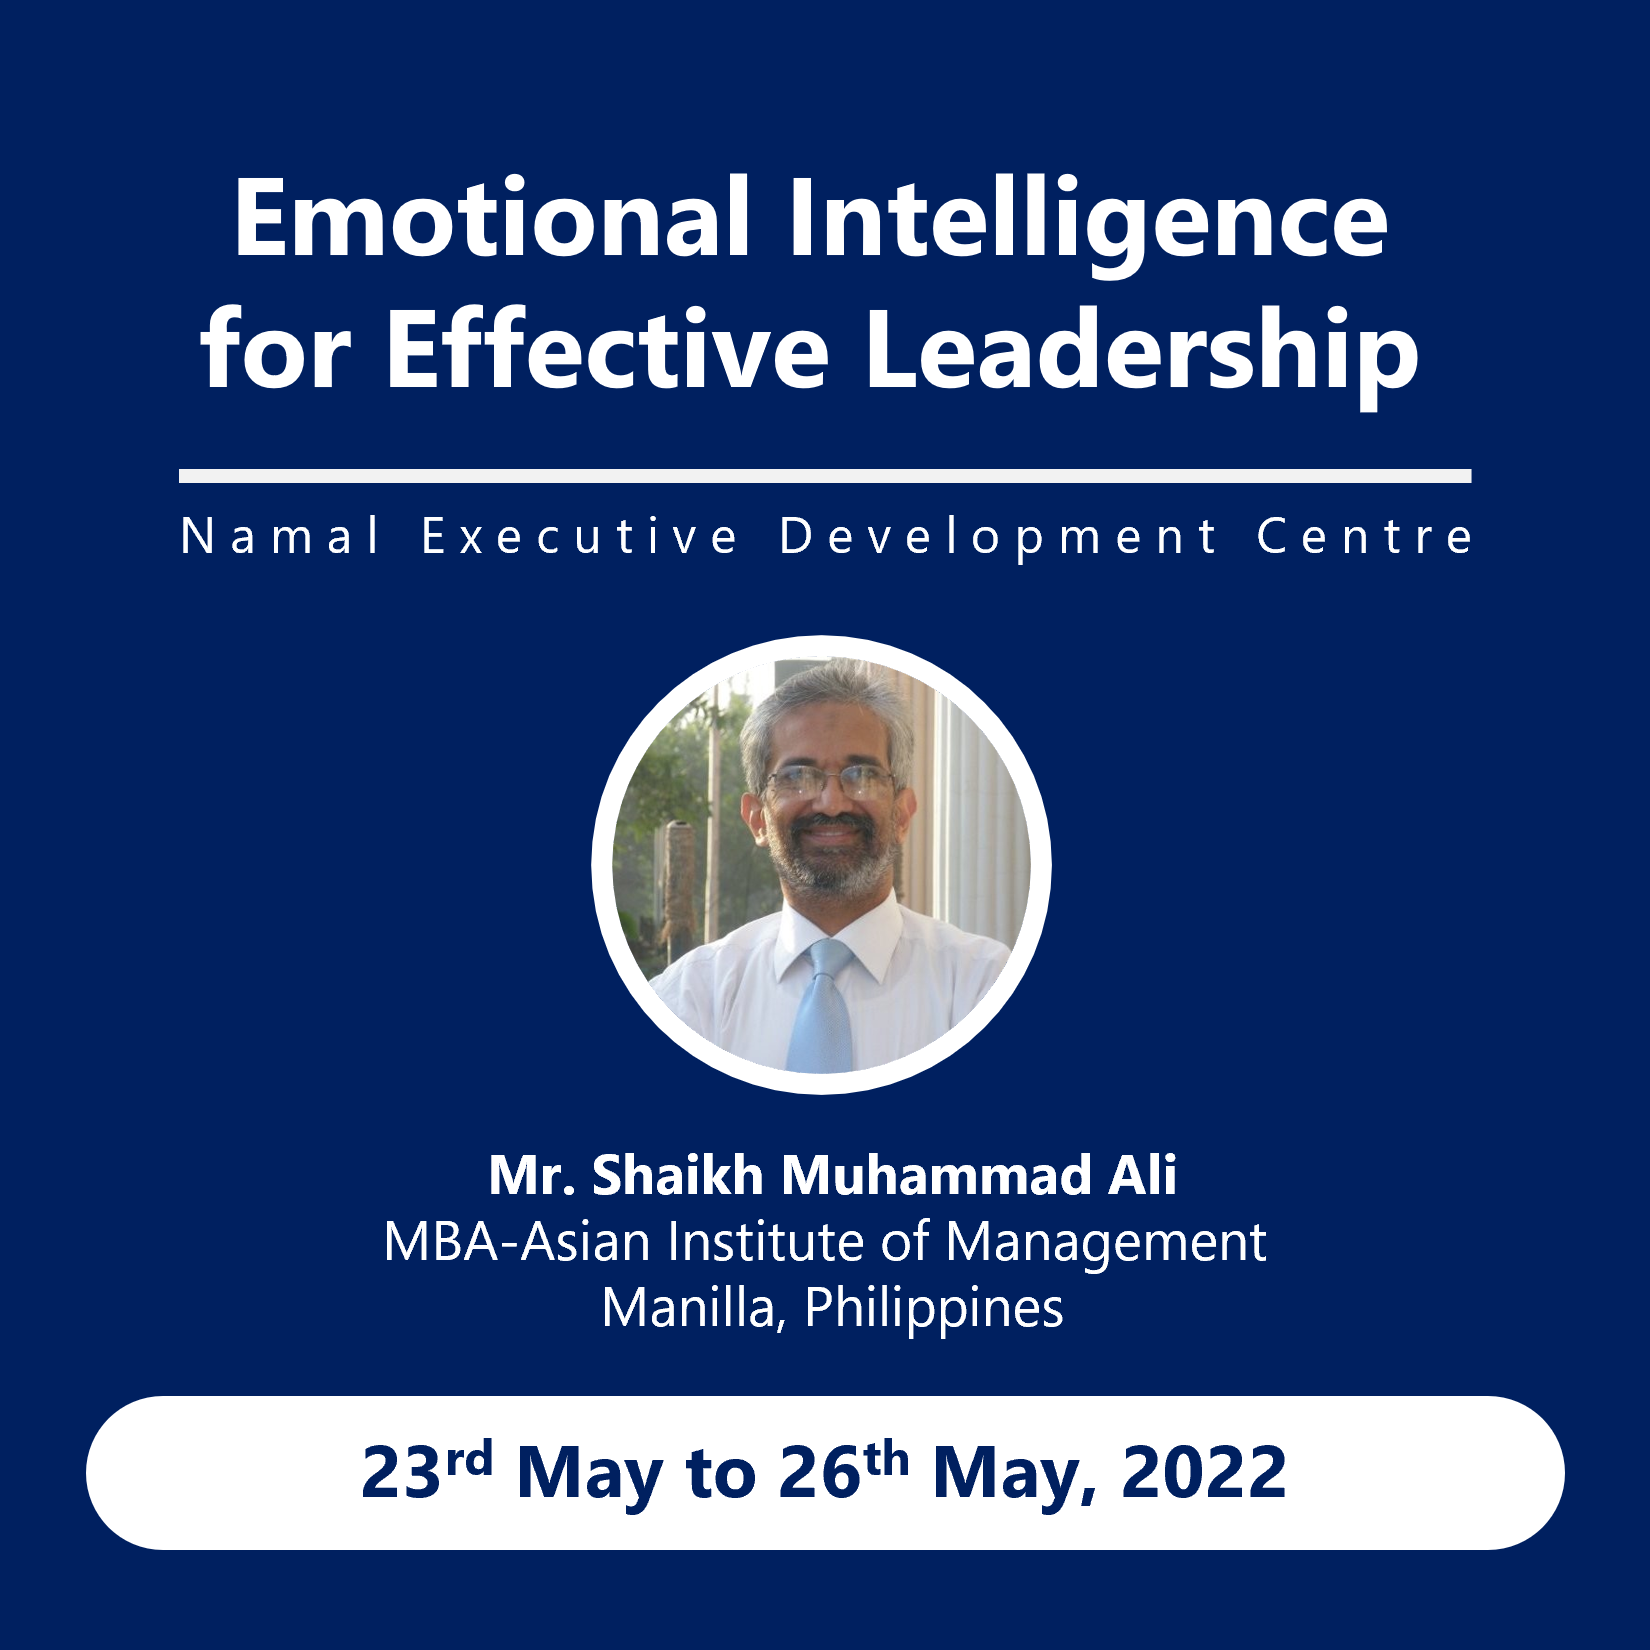 Emotional Intelligence for Effective Leadership by NEDC